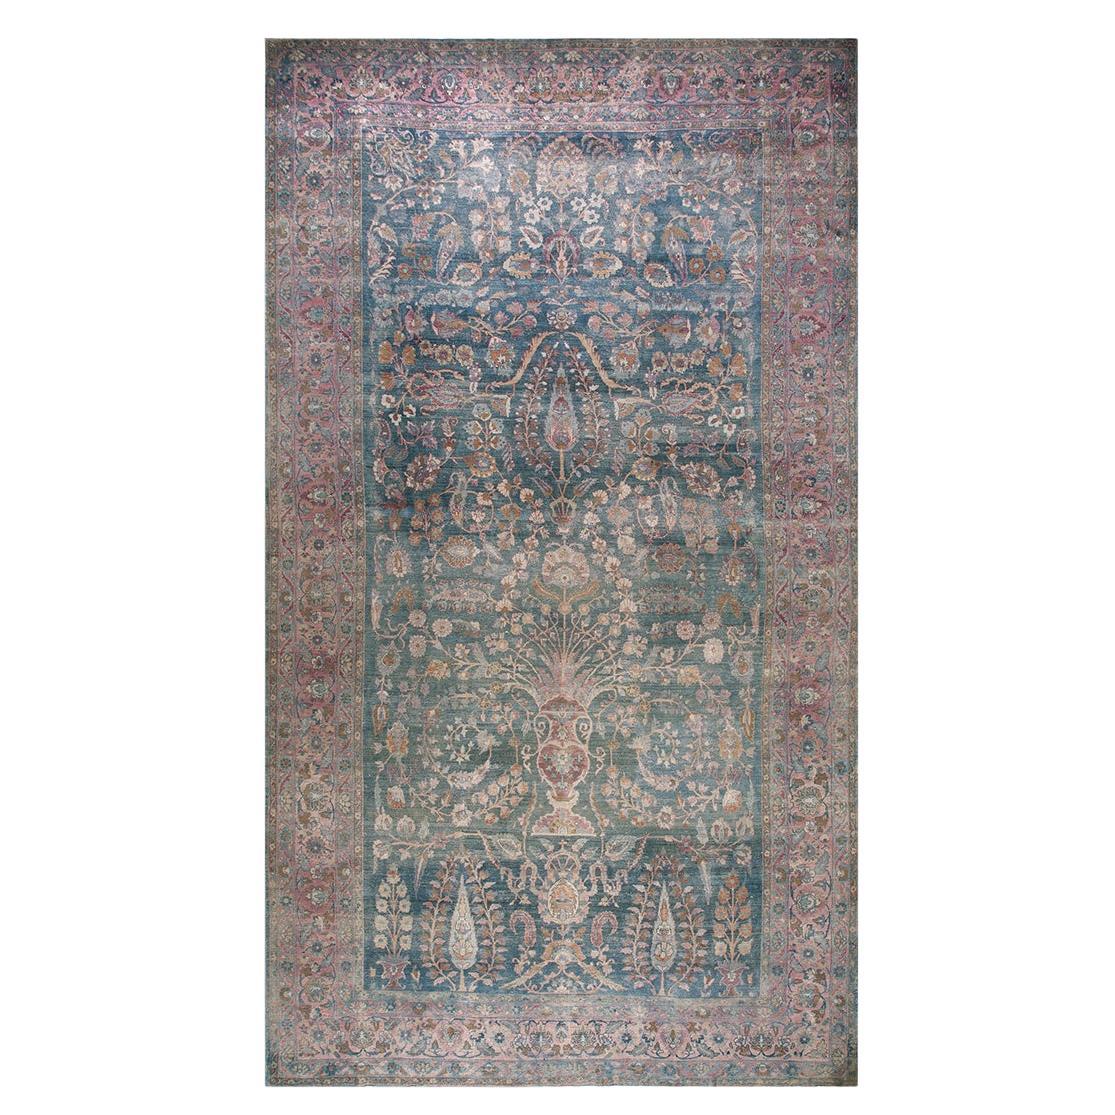 Early 20th Century N.E. Persian Khorassan Moud Carpet (10' x 18'4" - 305 x 560)